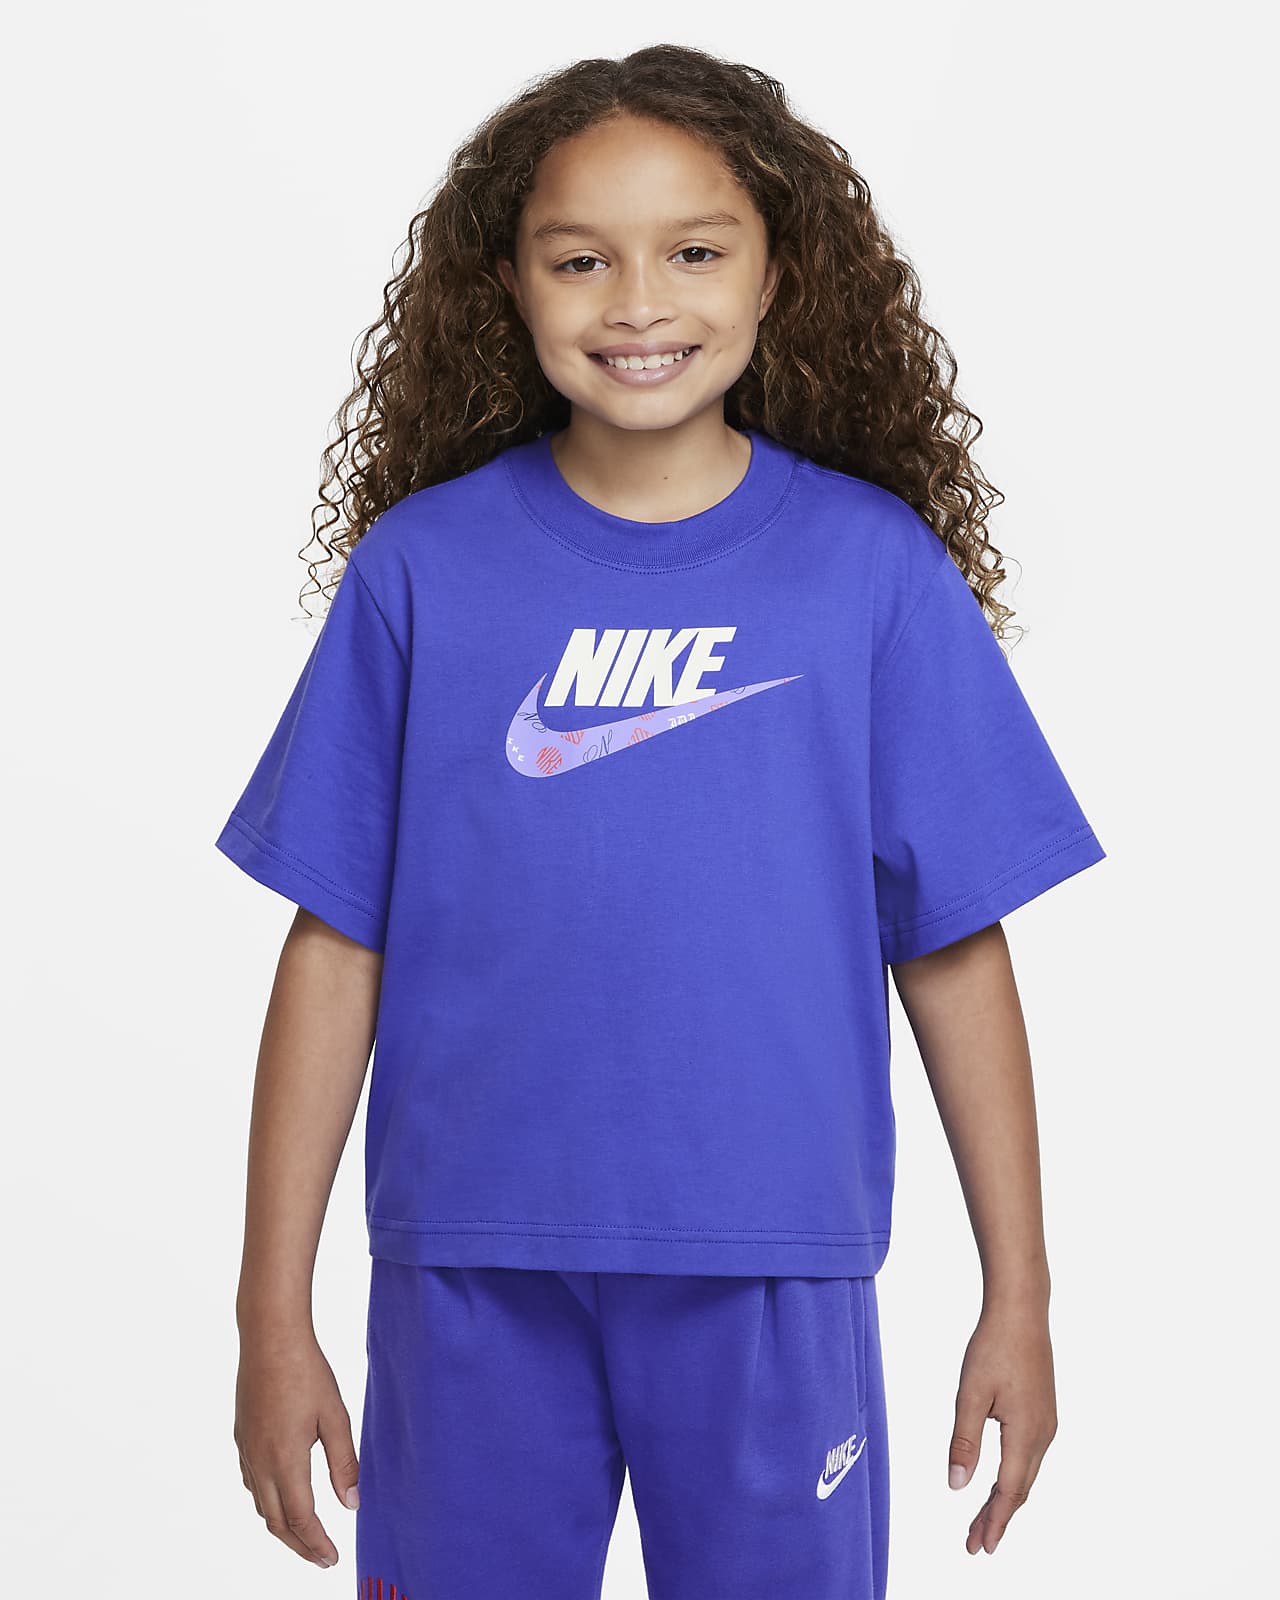 Nike公式 ナイキ スポーツウェア ジュニア ガールズ Tシャツ オンラインストア 通販サイト